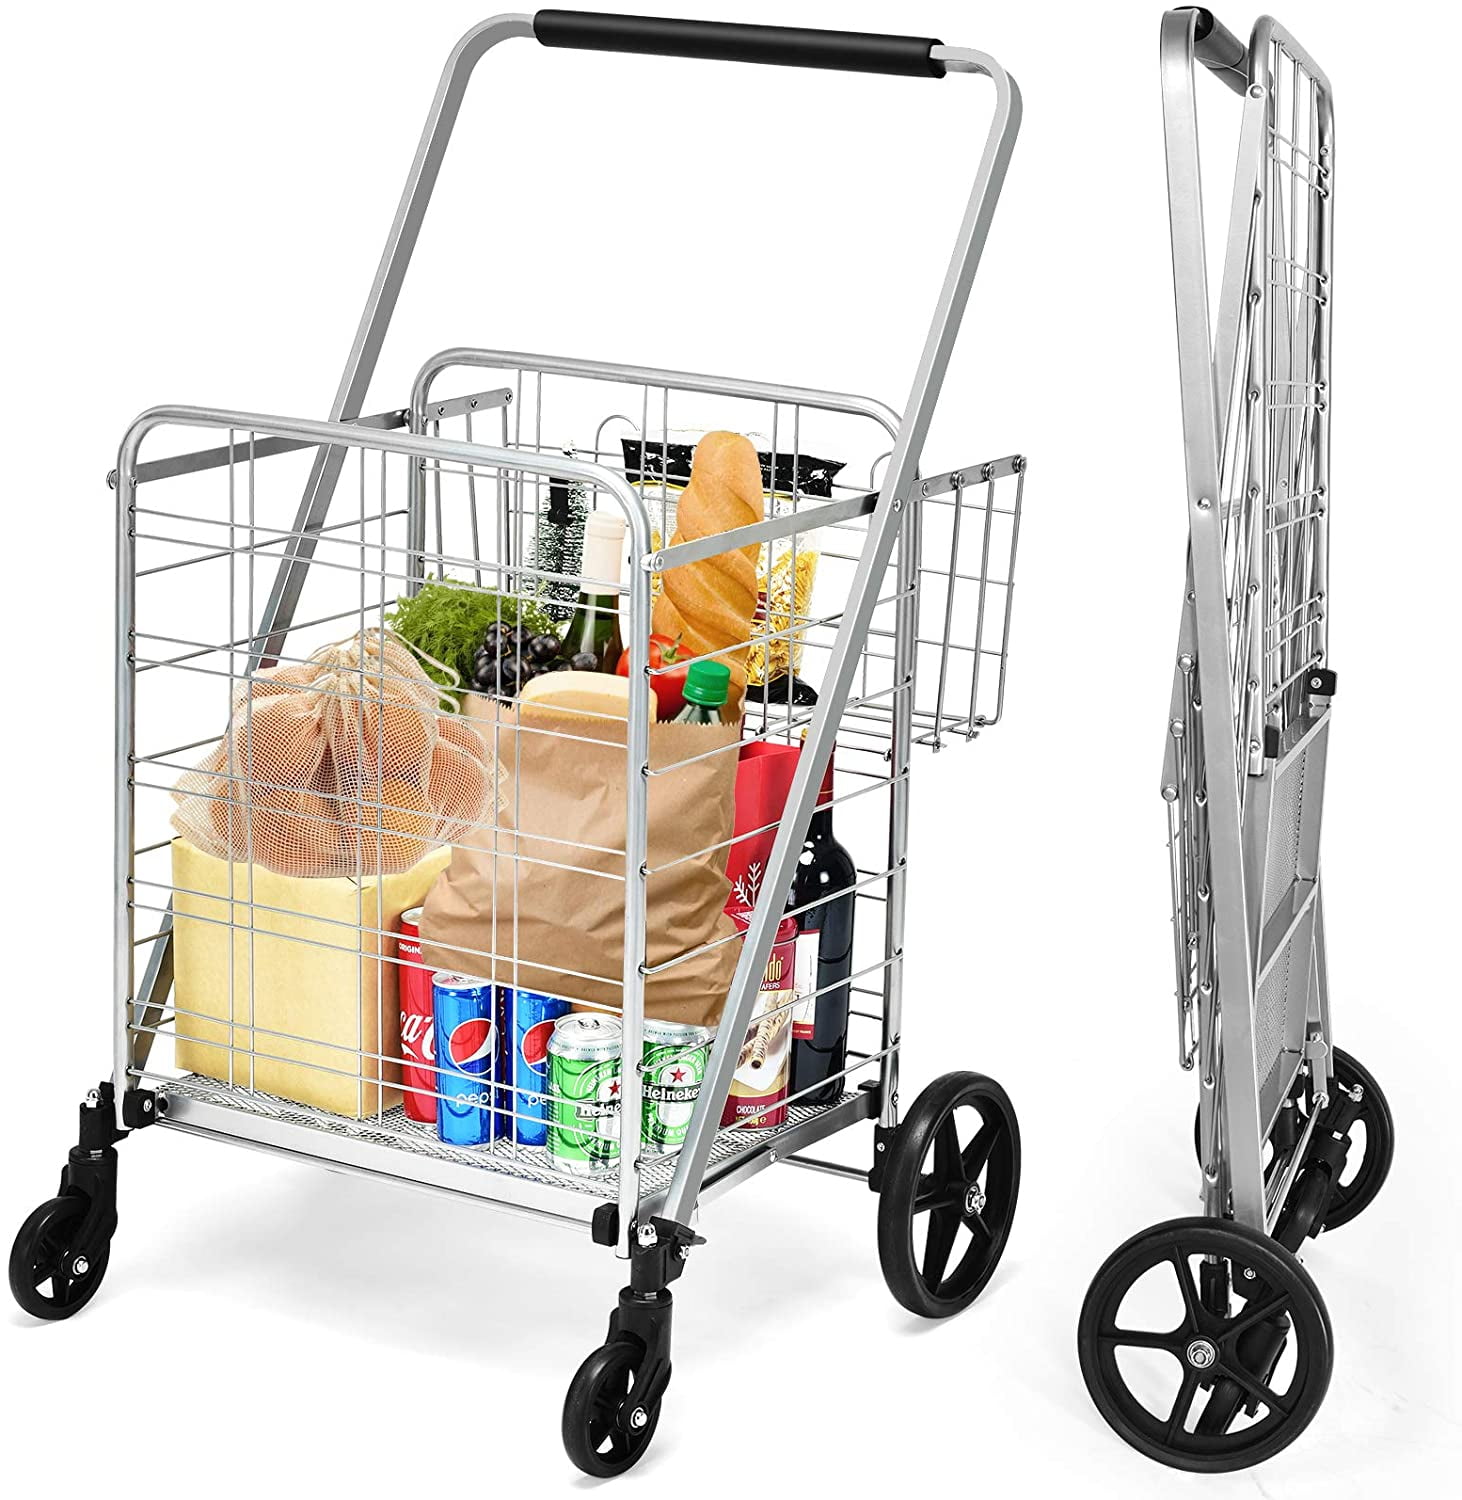 Silver Metal Supermarket Grocery Carts Rolling Shopping Baskets Swivel Wheels 